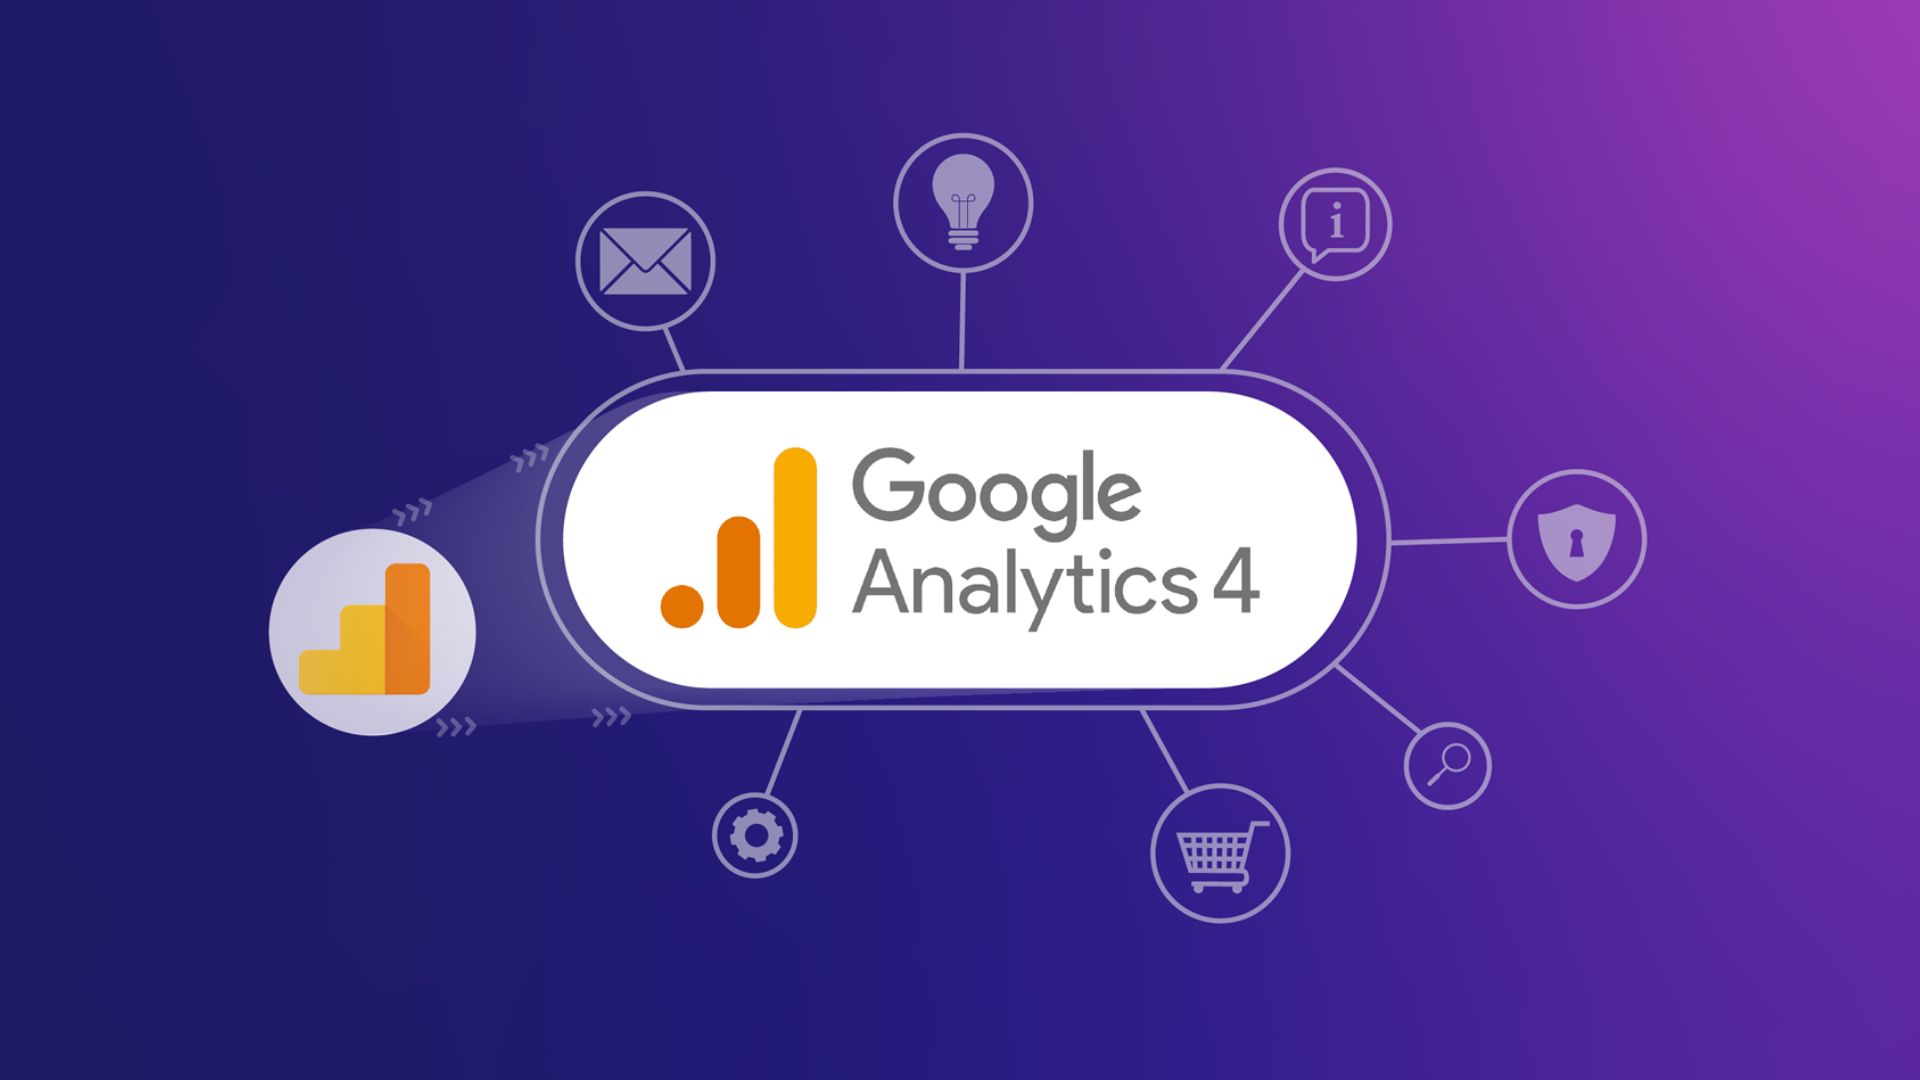 Google Analytics Tutorial Videos - Advanced Insights For Website Optimization